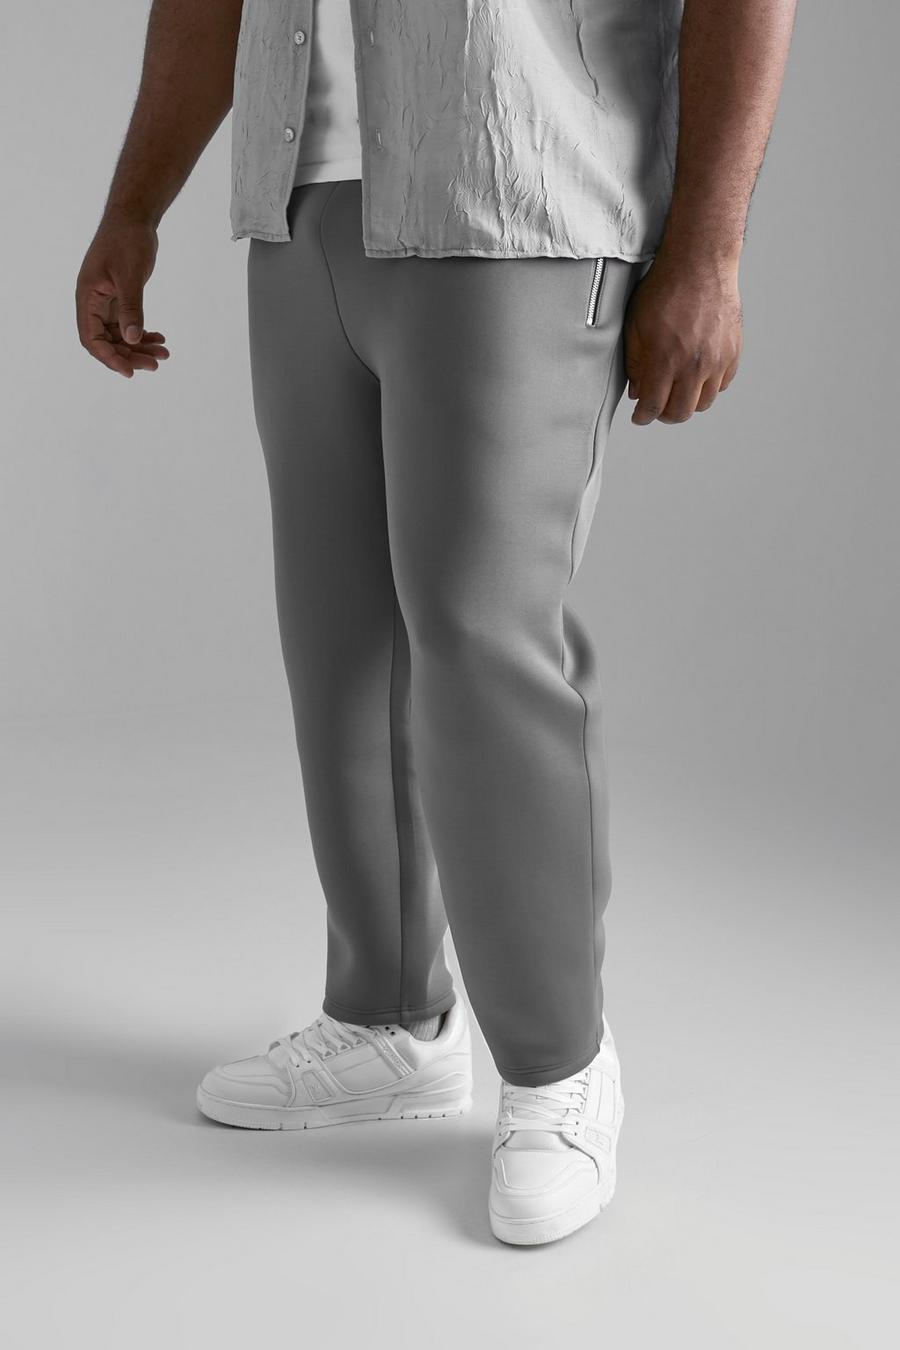 Pantaloni affusolati Plus Size in neoprene, Grey grigio